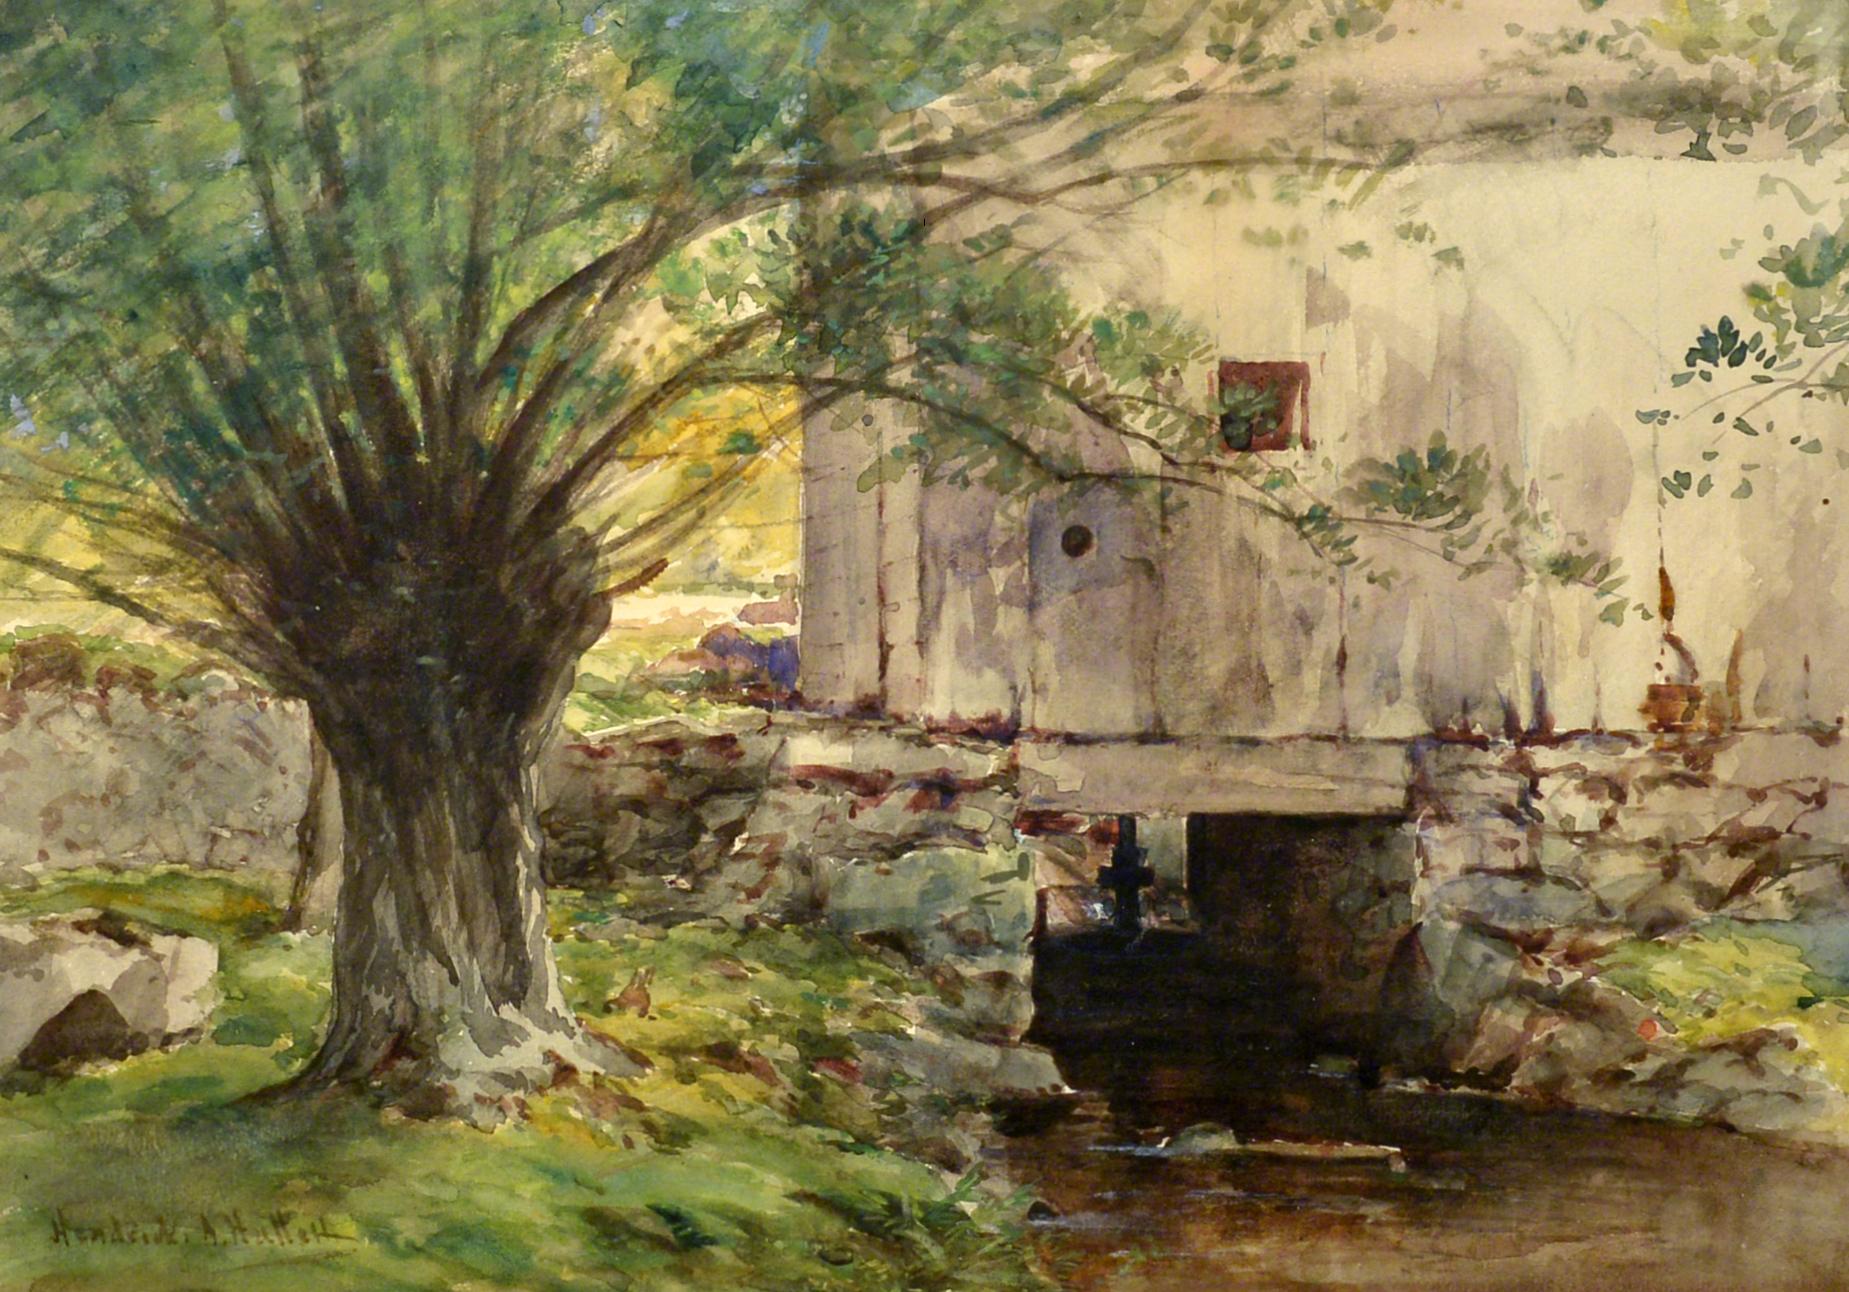 "Sunlit Willow, " Hendricks A. Hallett, watercolor, trees, stream, ca 1890-1900